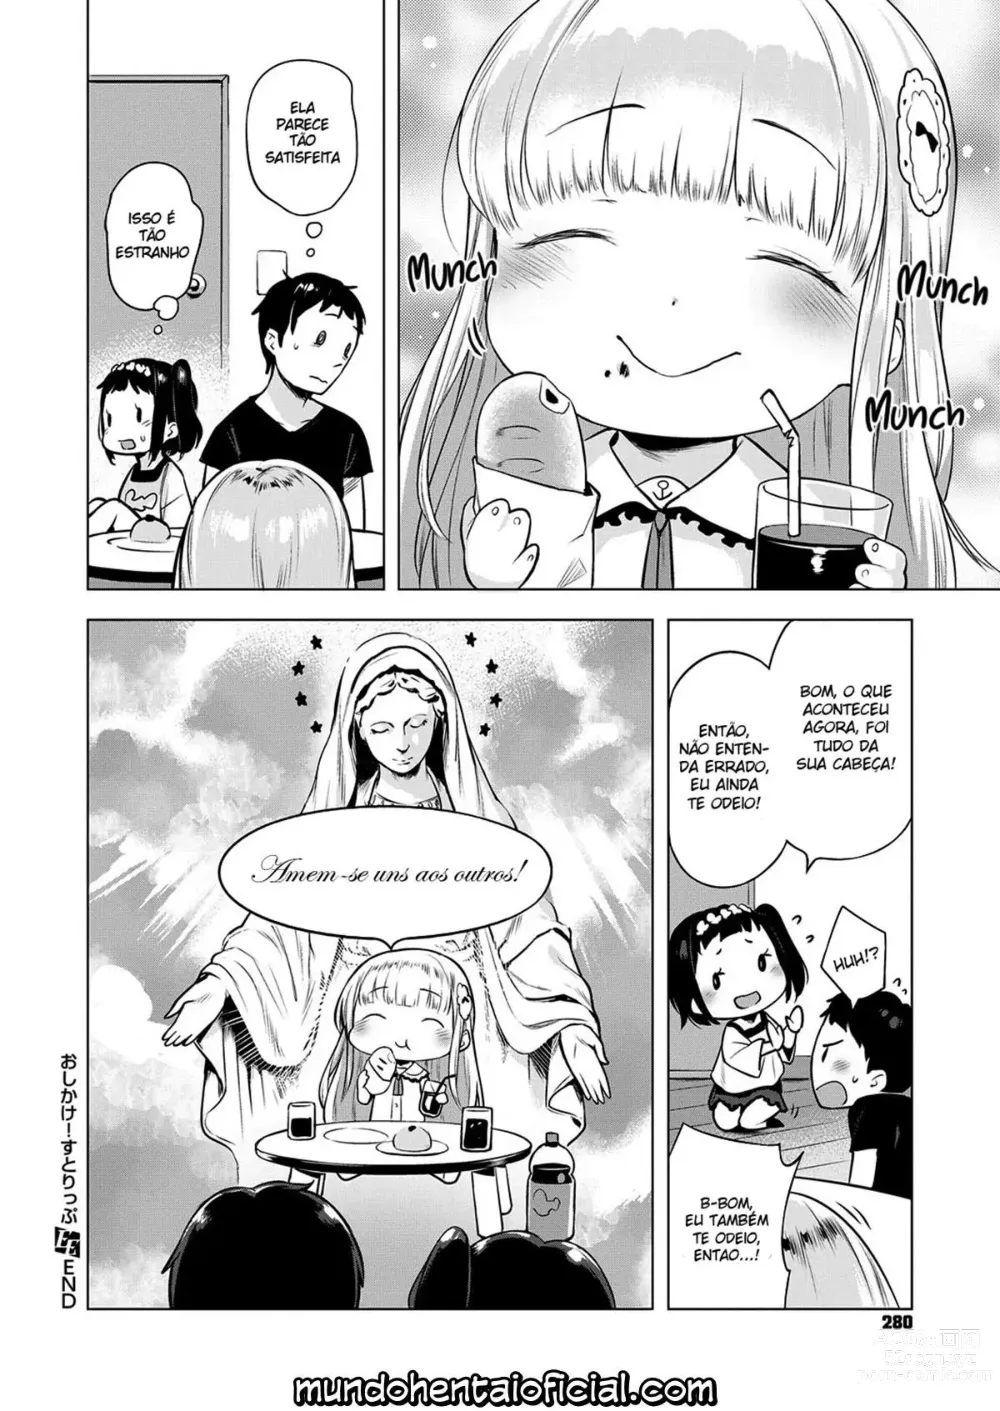 Page 30 of manga Intruding Stripping!